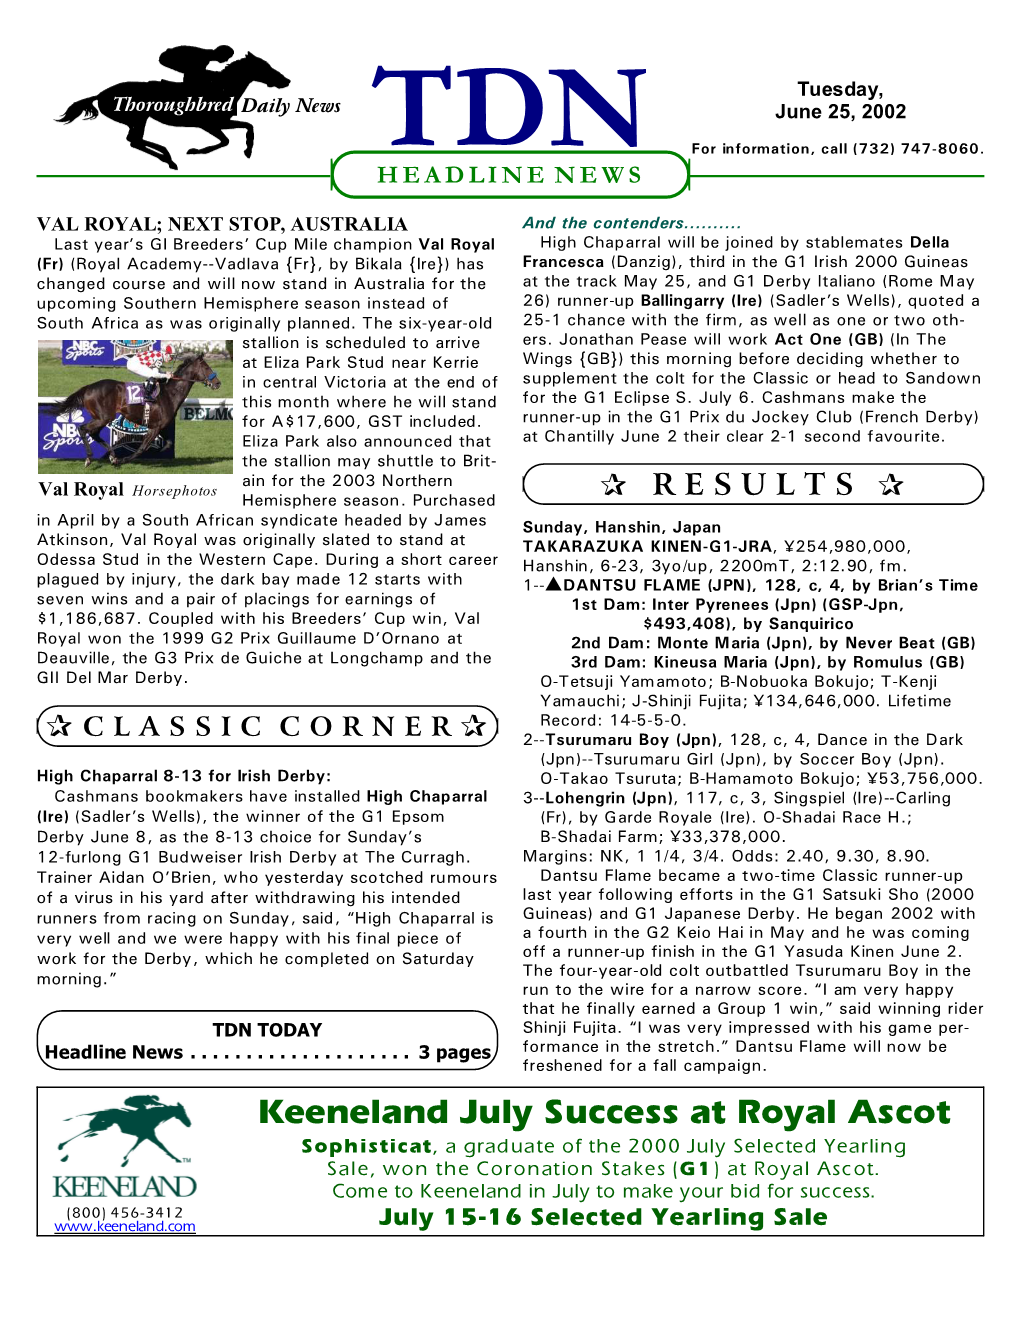 Keeneland July Success at Royal Ascot Sophisticat, a Graduate of the 2000 July Selected Yearling Sale, Won the Coronation Stakes (G1) at Royal Ascot